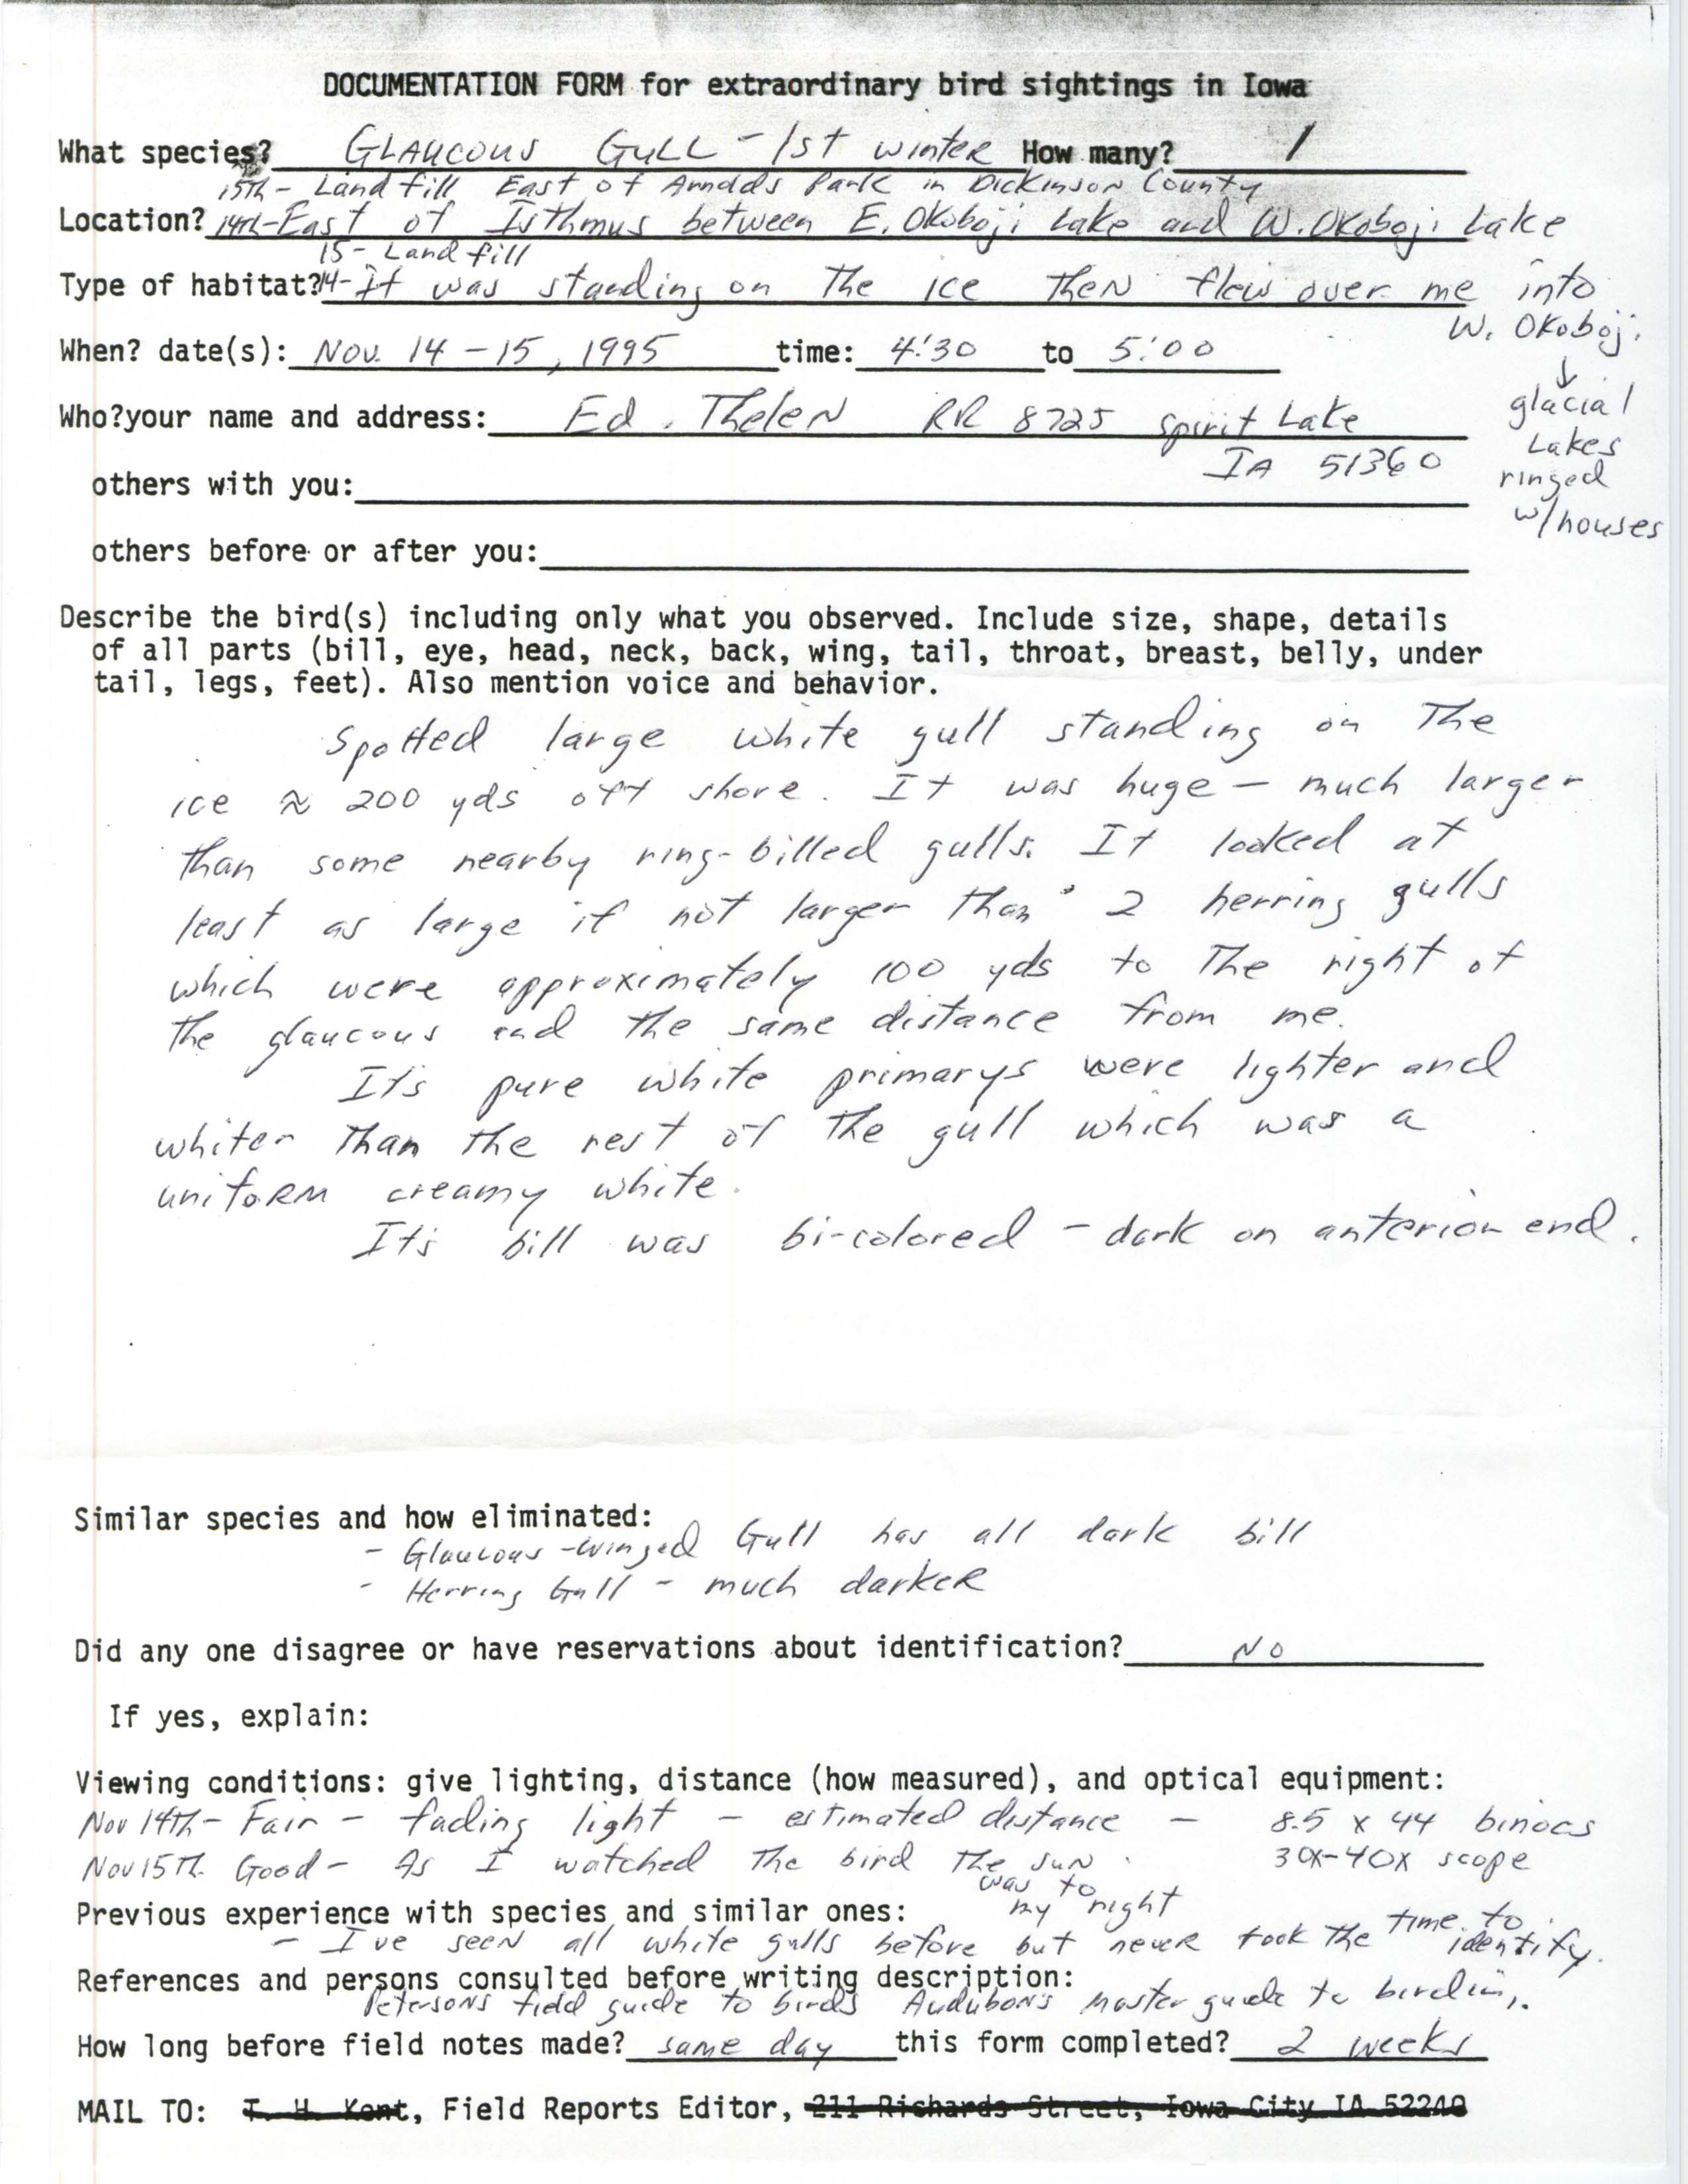 Rare bird documentation form for Glaucous Gull near Arnolds Park in Dickinson County in 1995